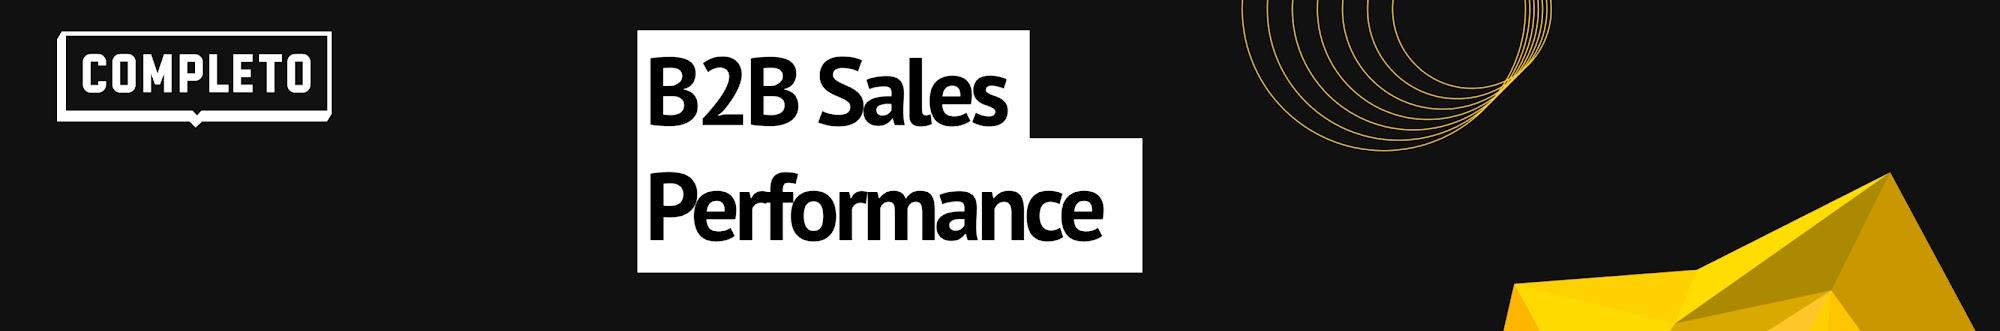 Комплето — B2B Sales Performance